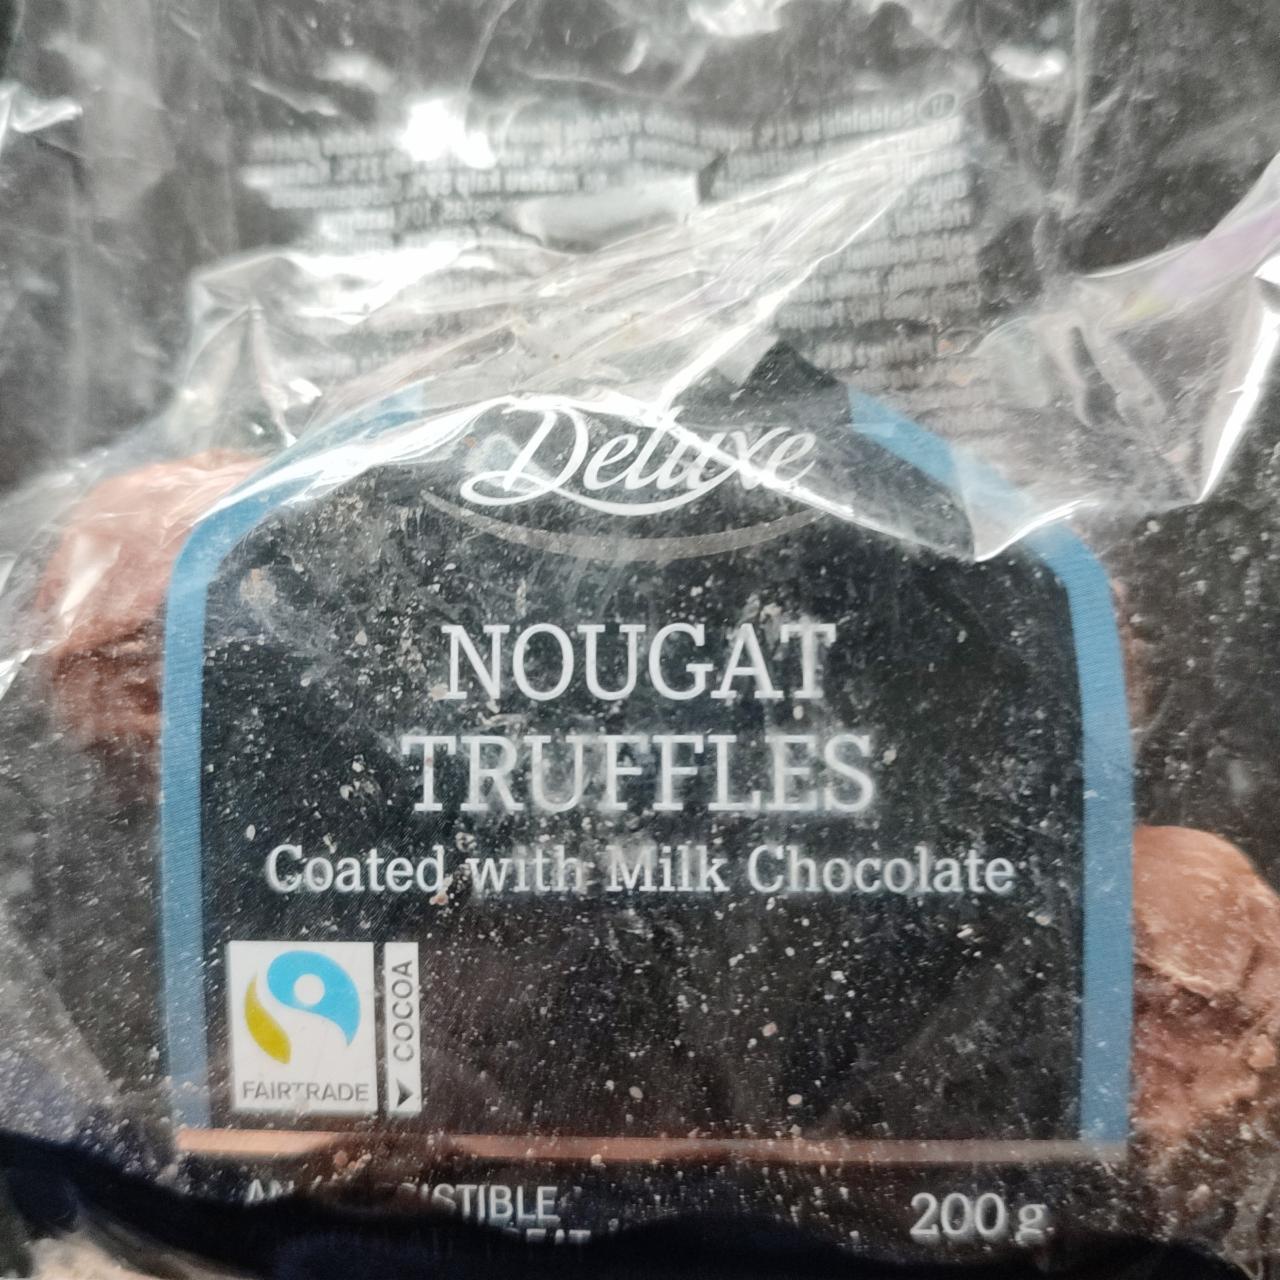 Zdjęcia - Deluxe Nougat Truffles Coated with Milk Chocolate